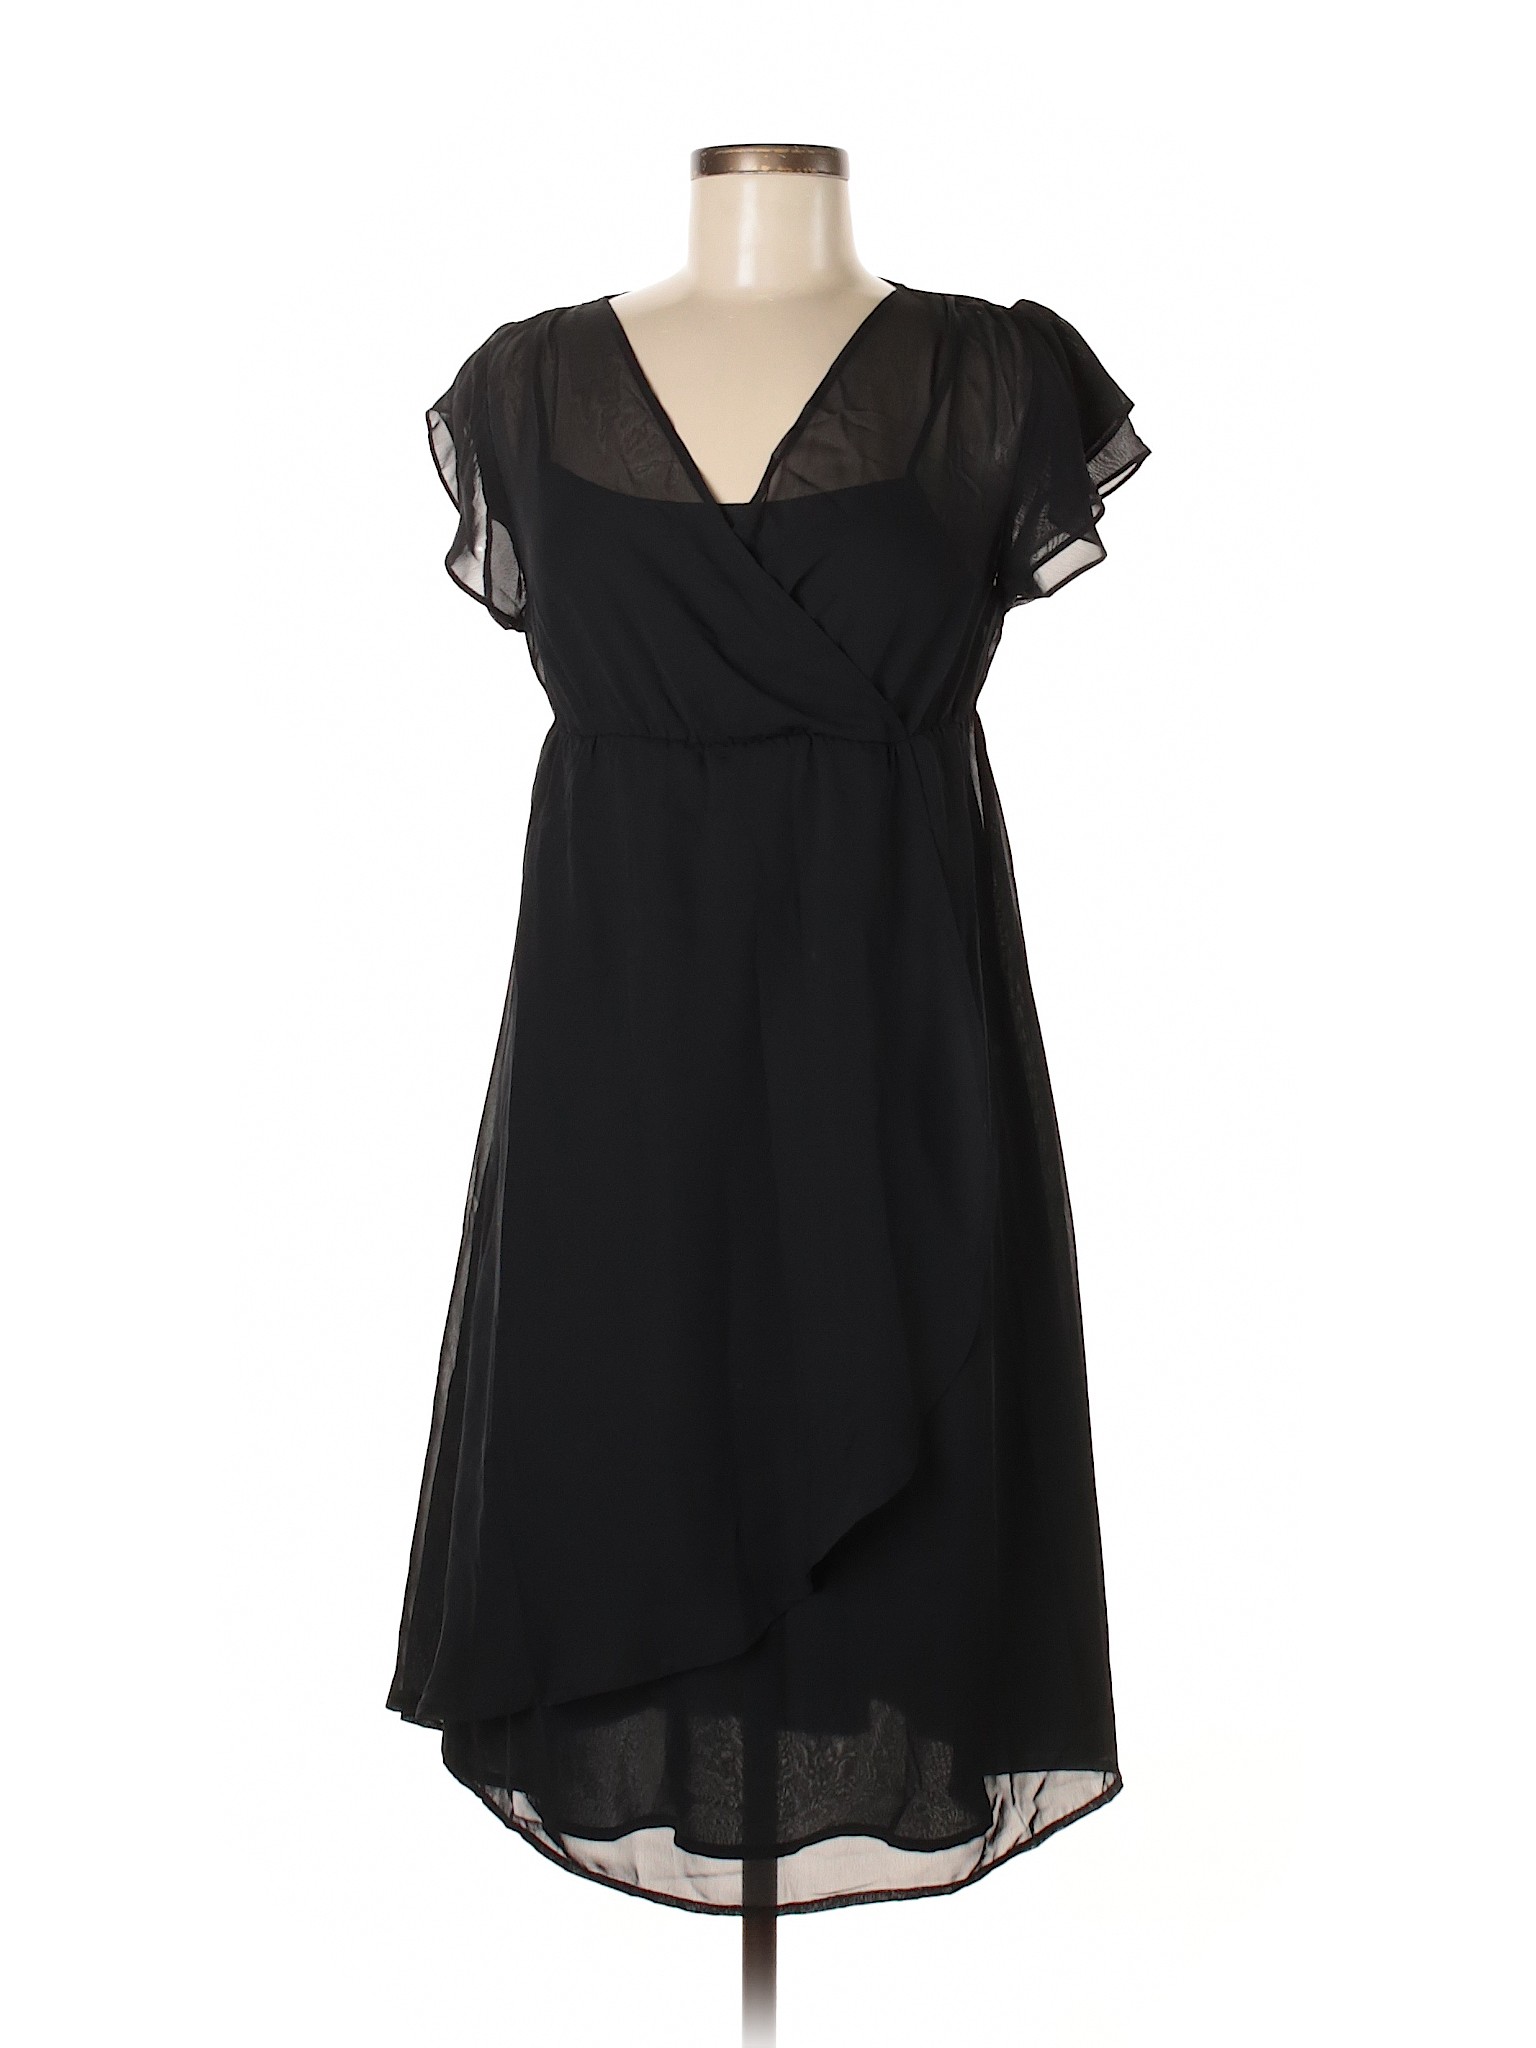 Merona Women Black Casual Dress S | eBay